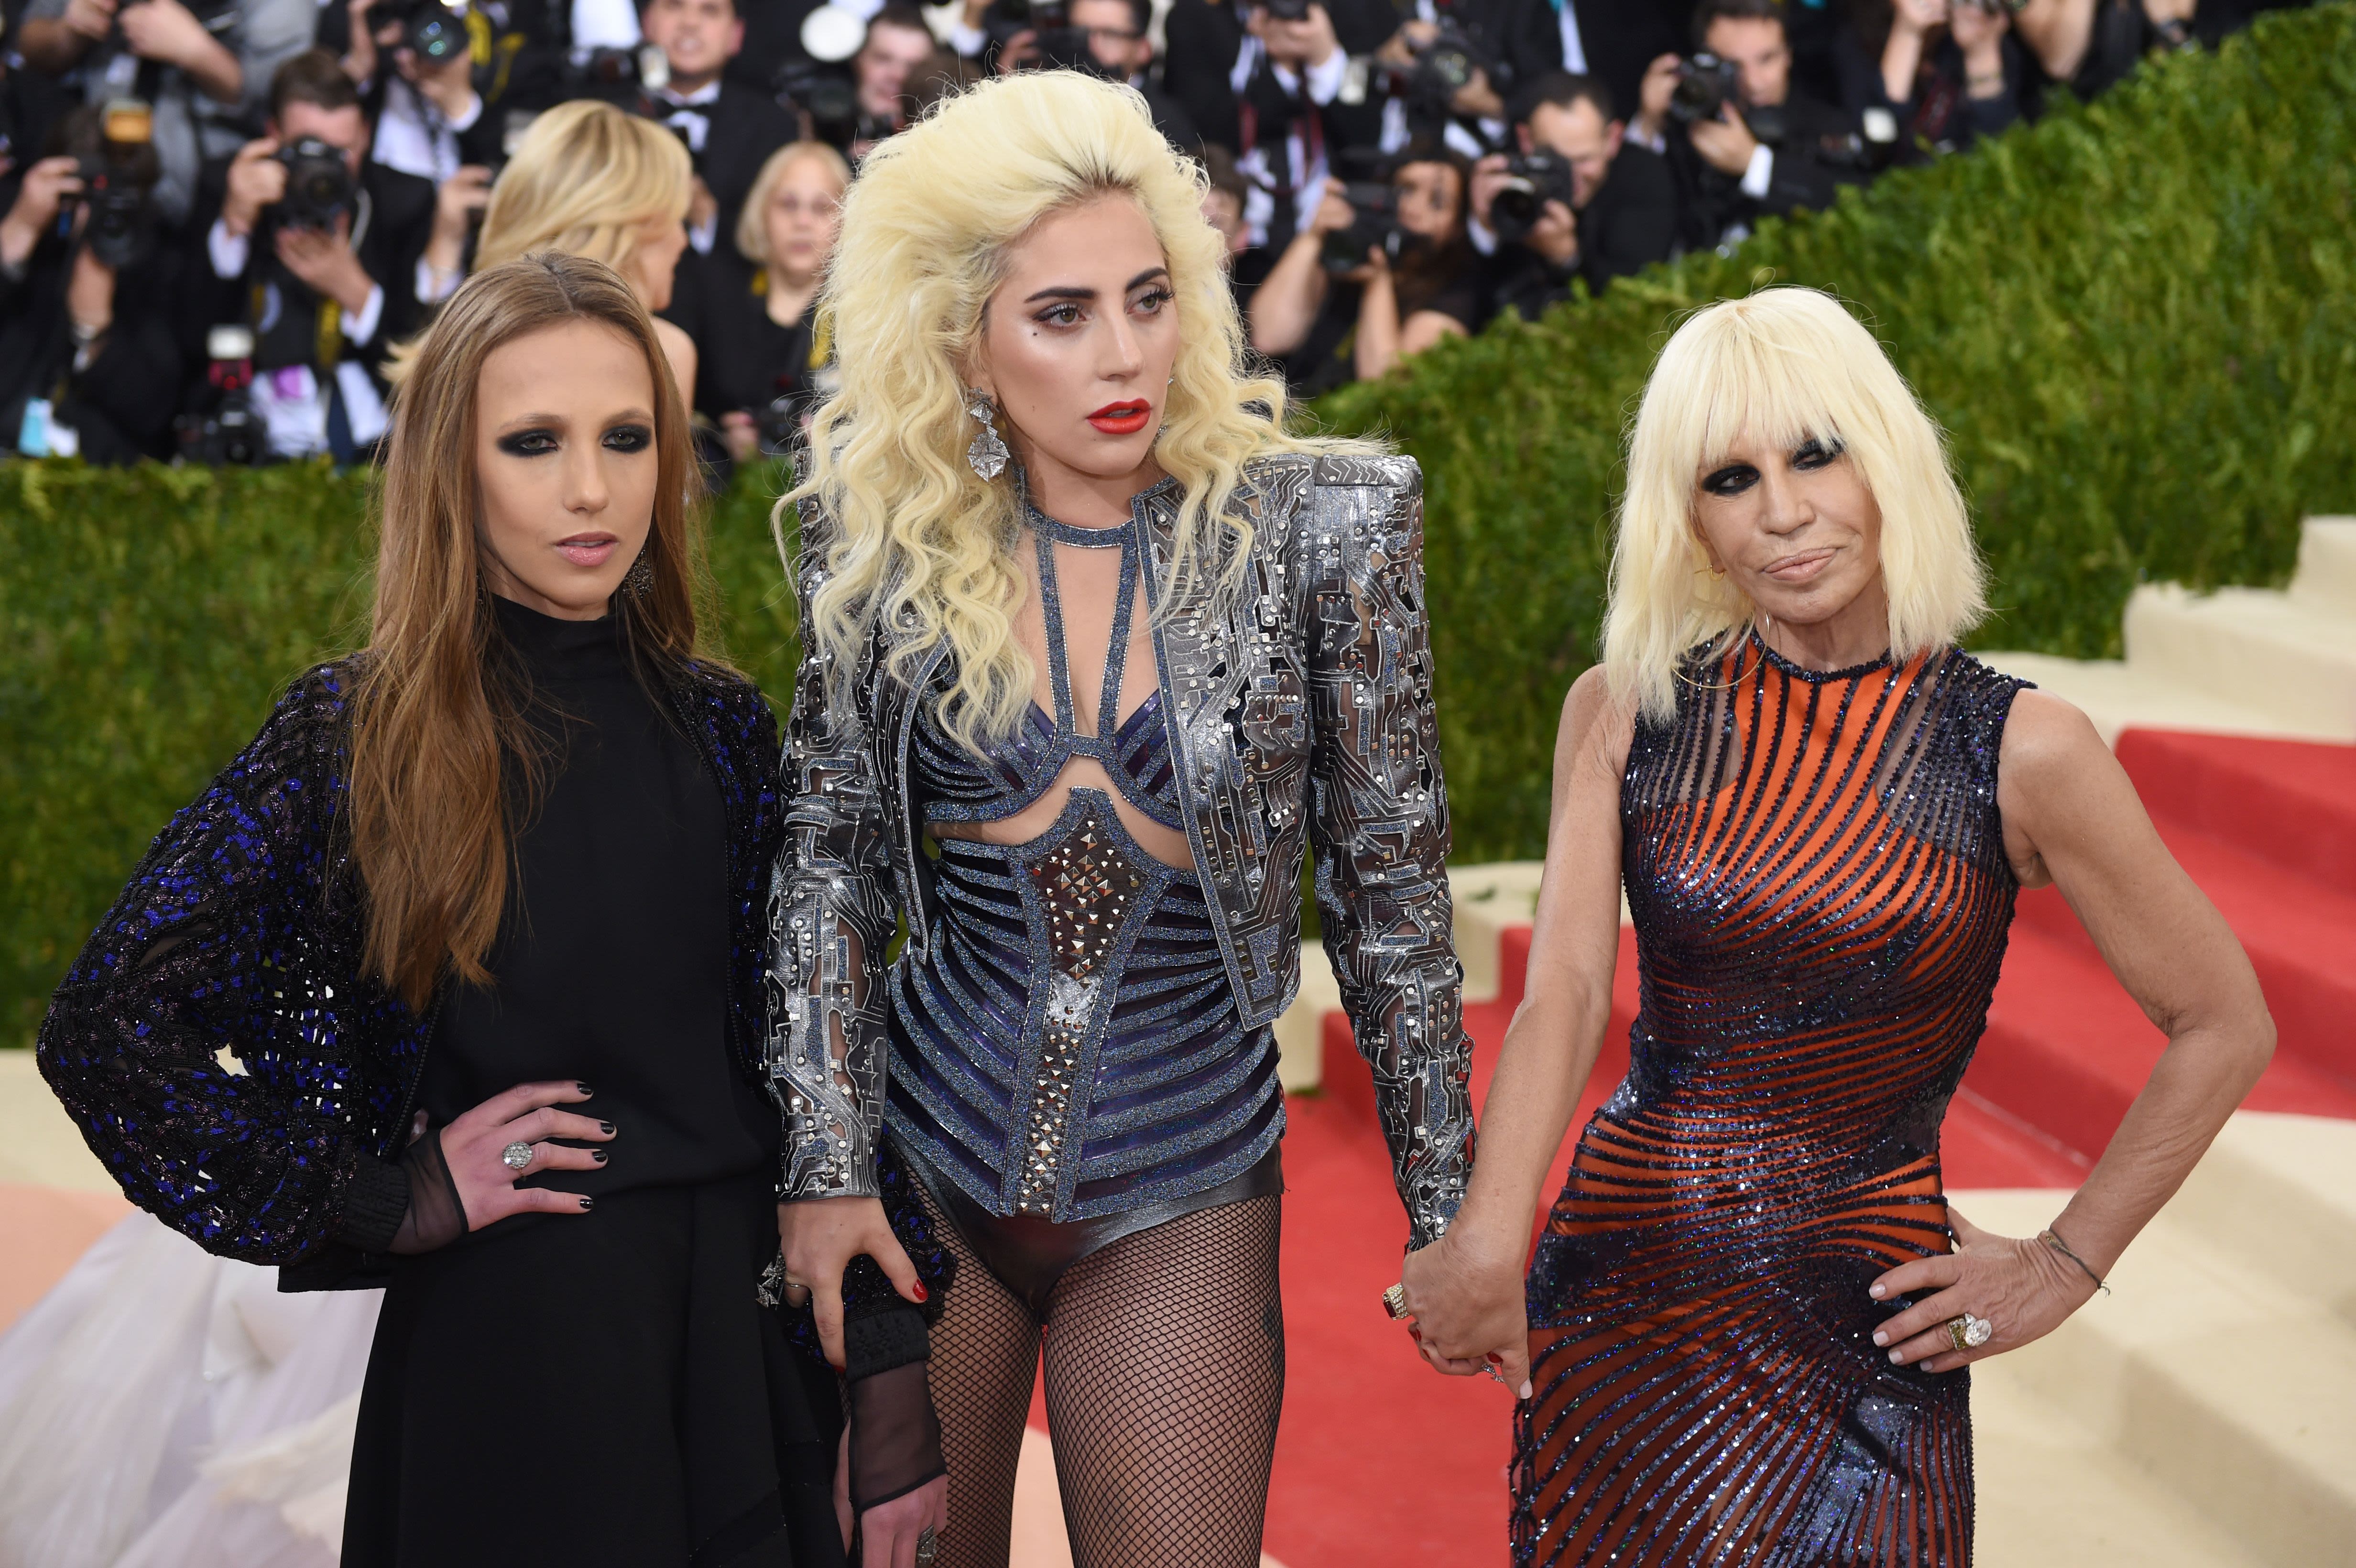 What will Versace look like under Michael Kors?